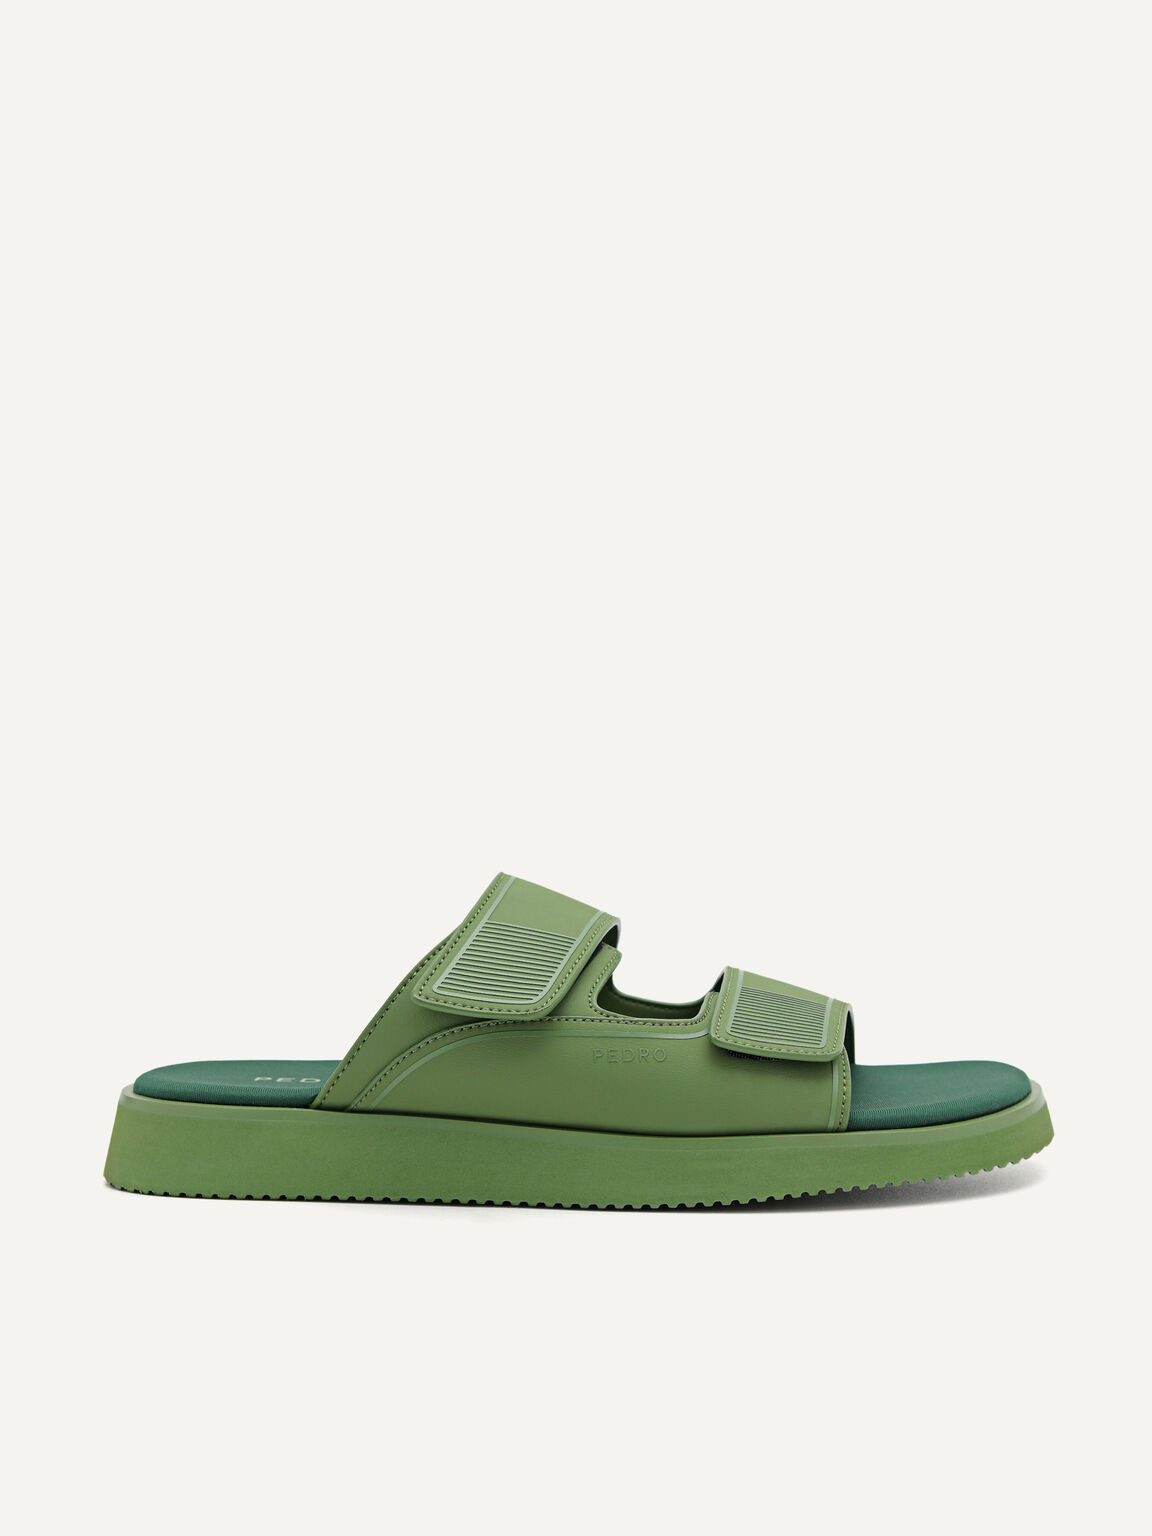 Slide Sandals, Military Green, hi-res